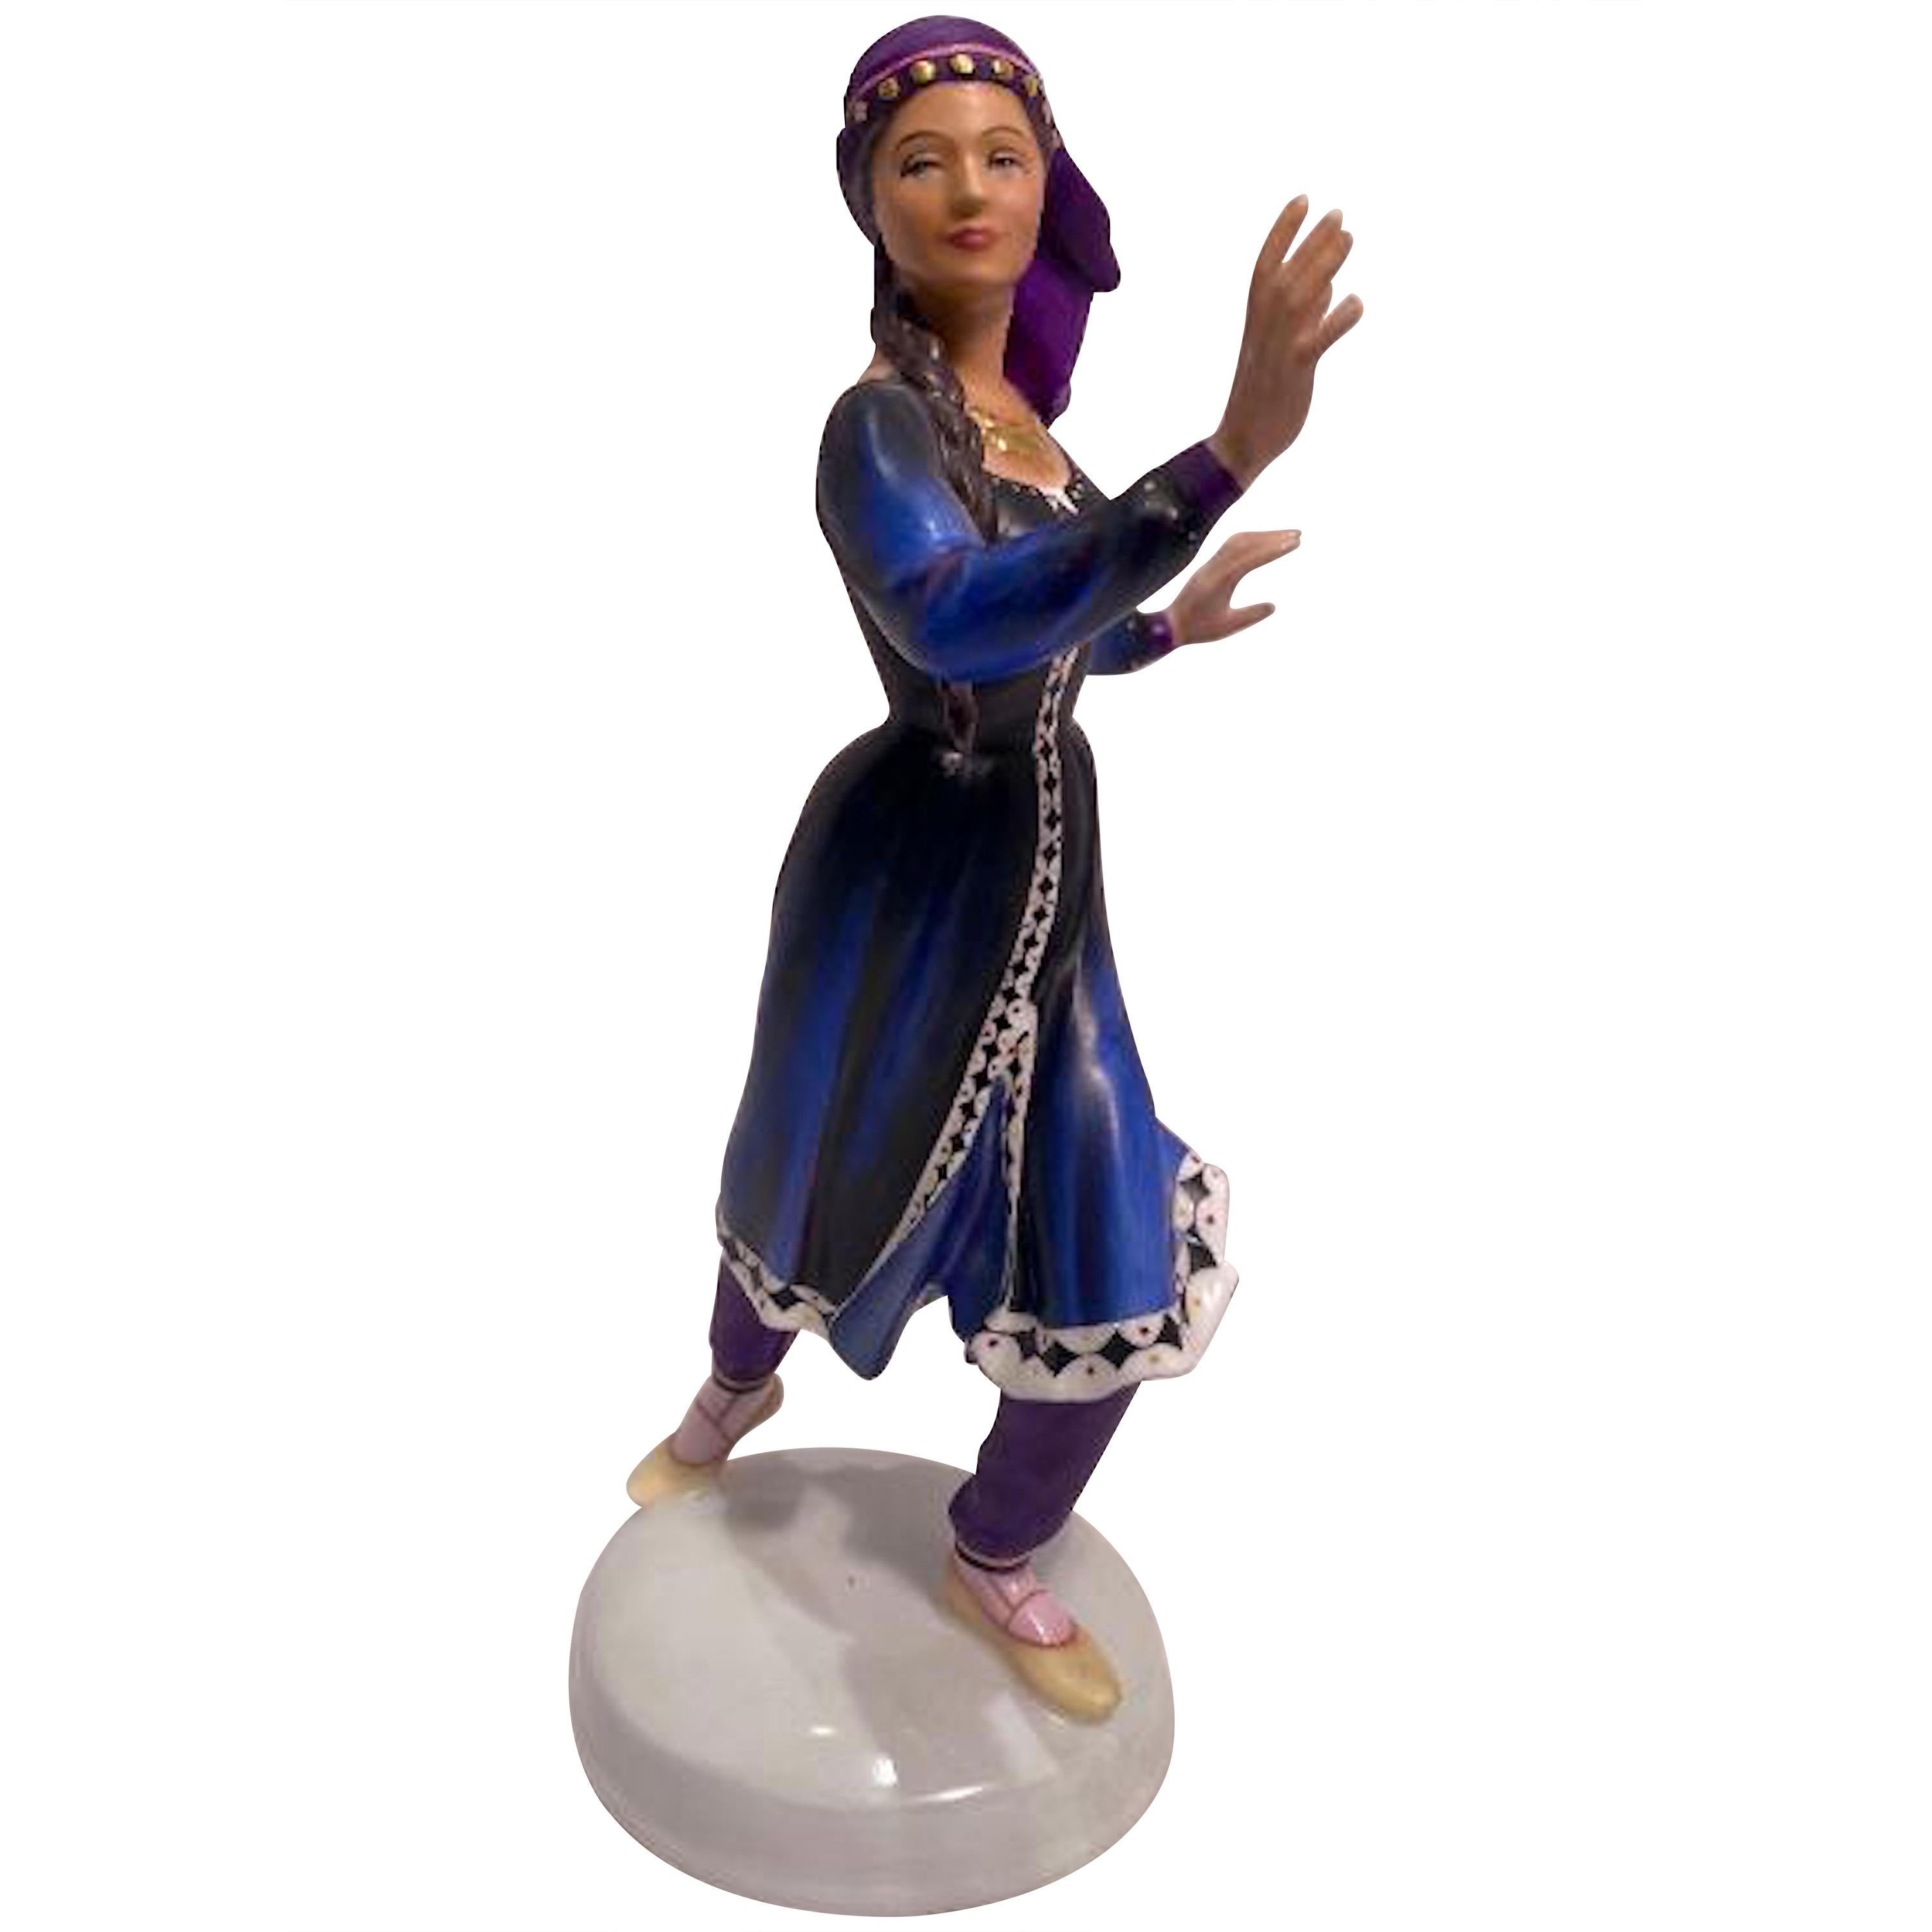 Royal Doulton “Dancers of the World Kurdish Dancer” Limited Edition Figurine